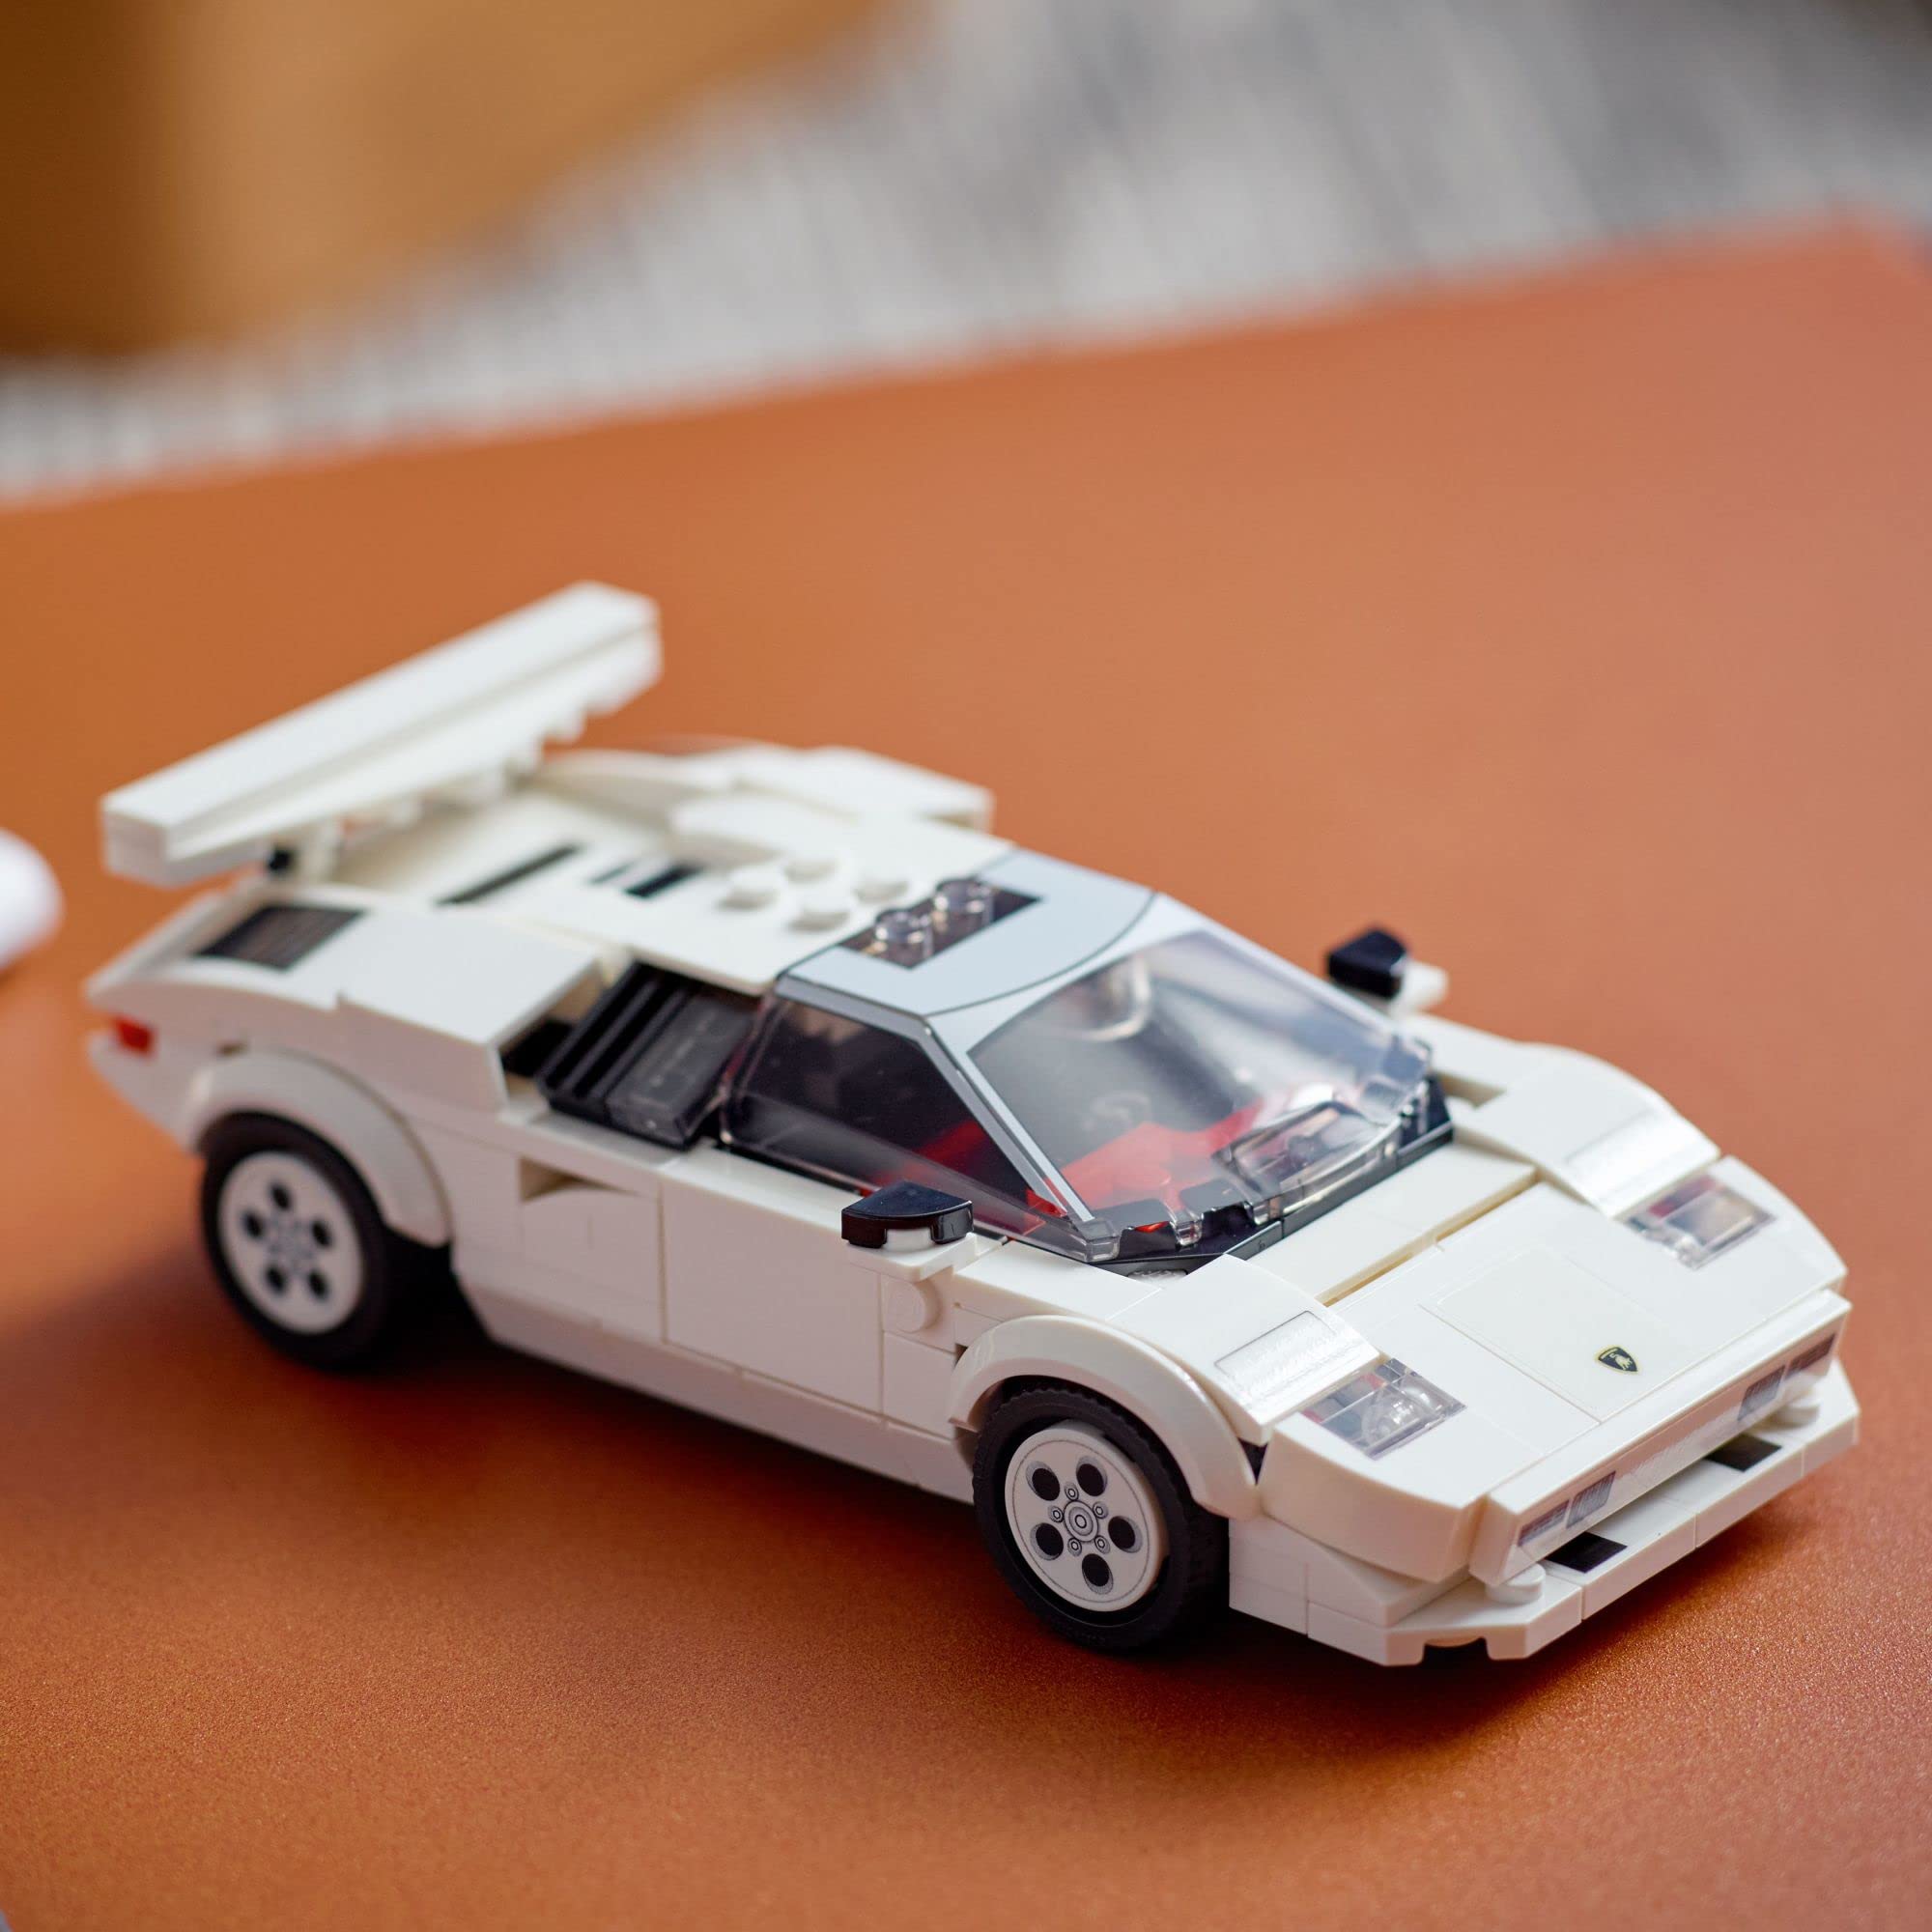 Mua LEGO Speed Champions Lamborghini Countach 76908, Race Car Toy Model  Replica, Collectible Building Set with Racing Driver Minifigure trên Amazon  Mỹ chính hãng 2023 | Giaonhan247